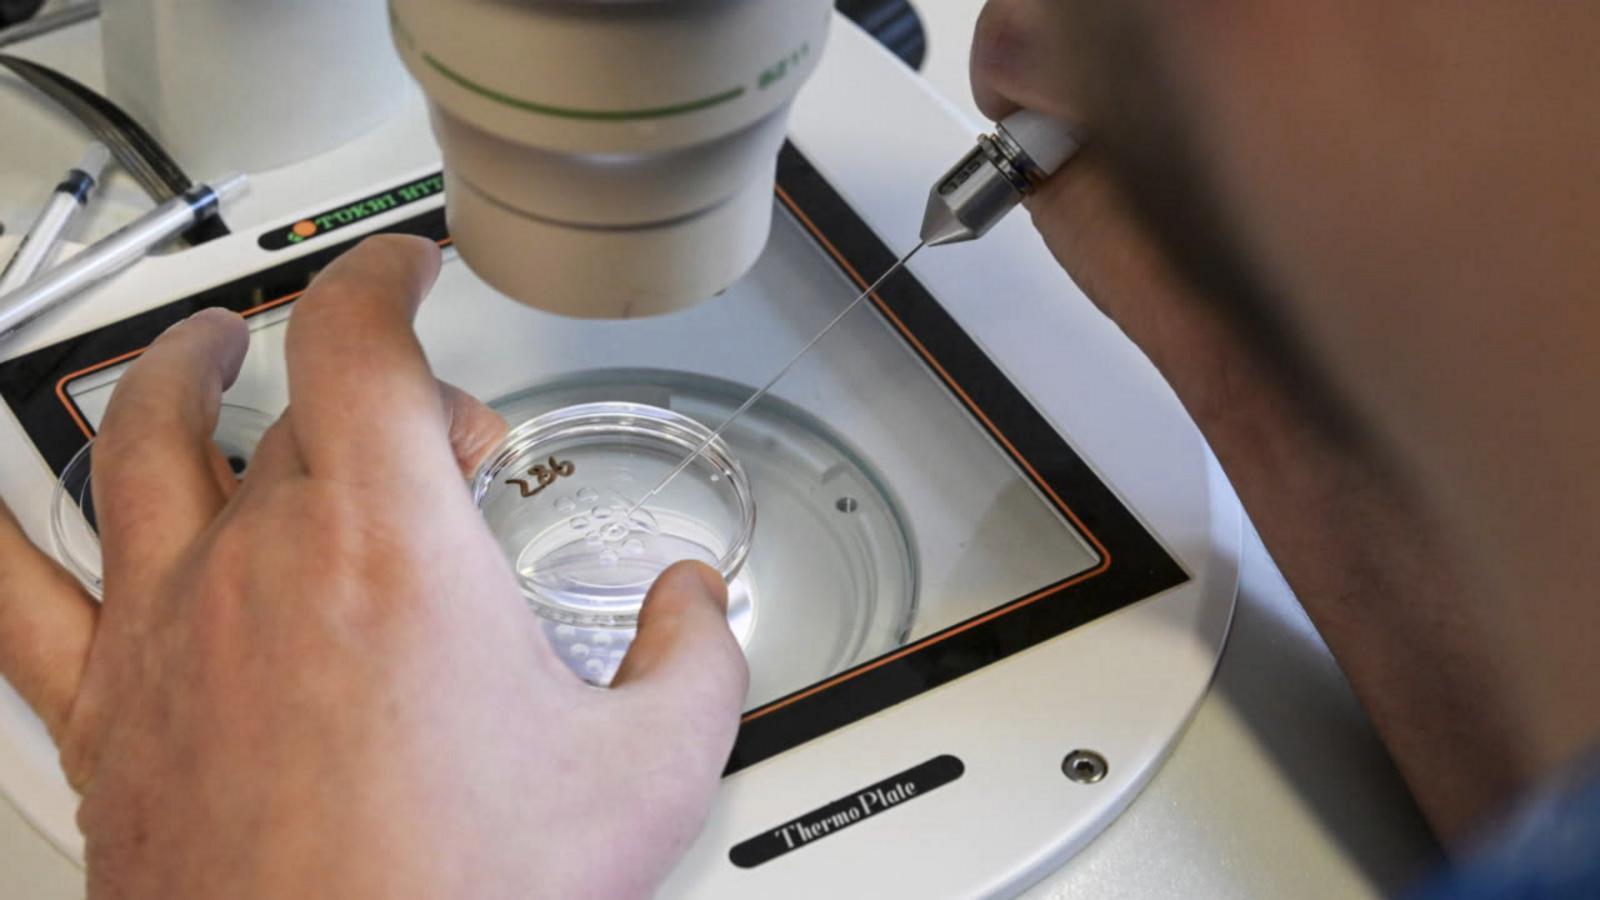 VIDEO: Alabama legislature passes bill to restore IVF access